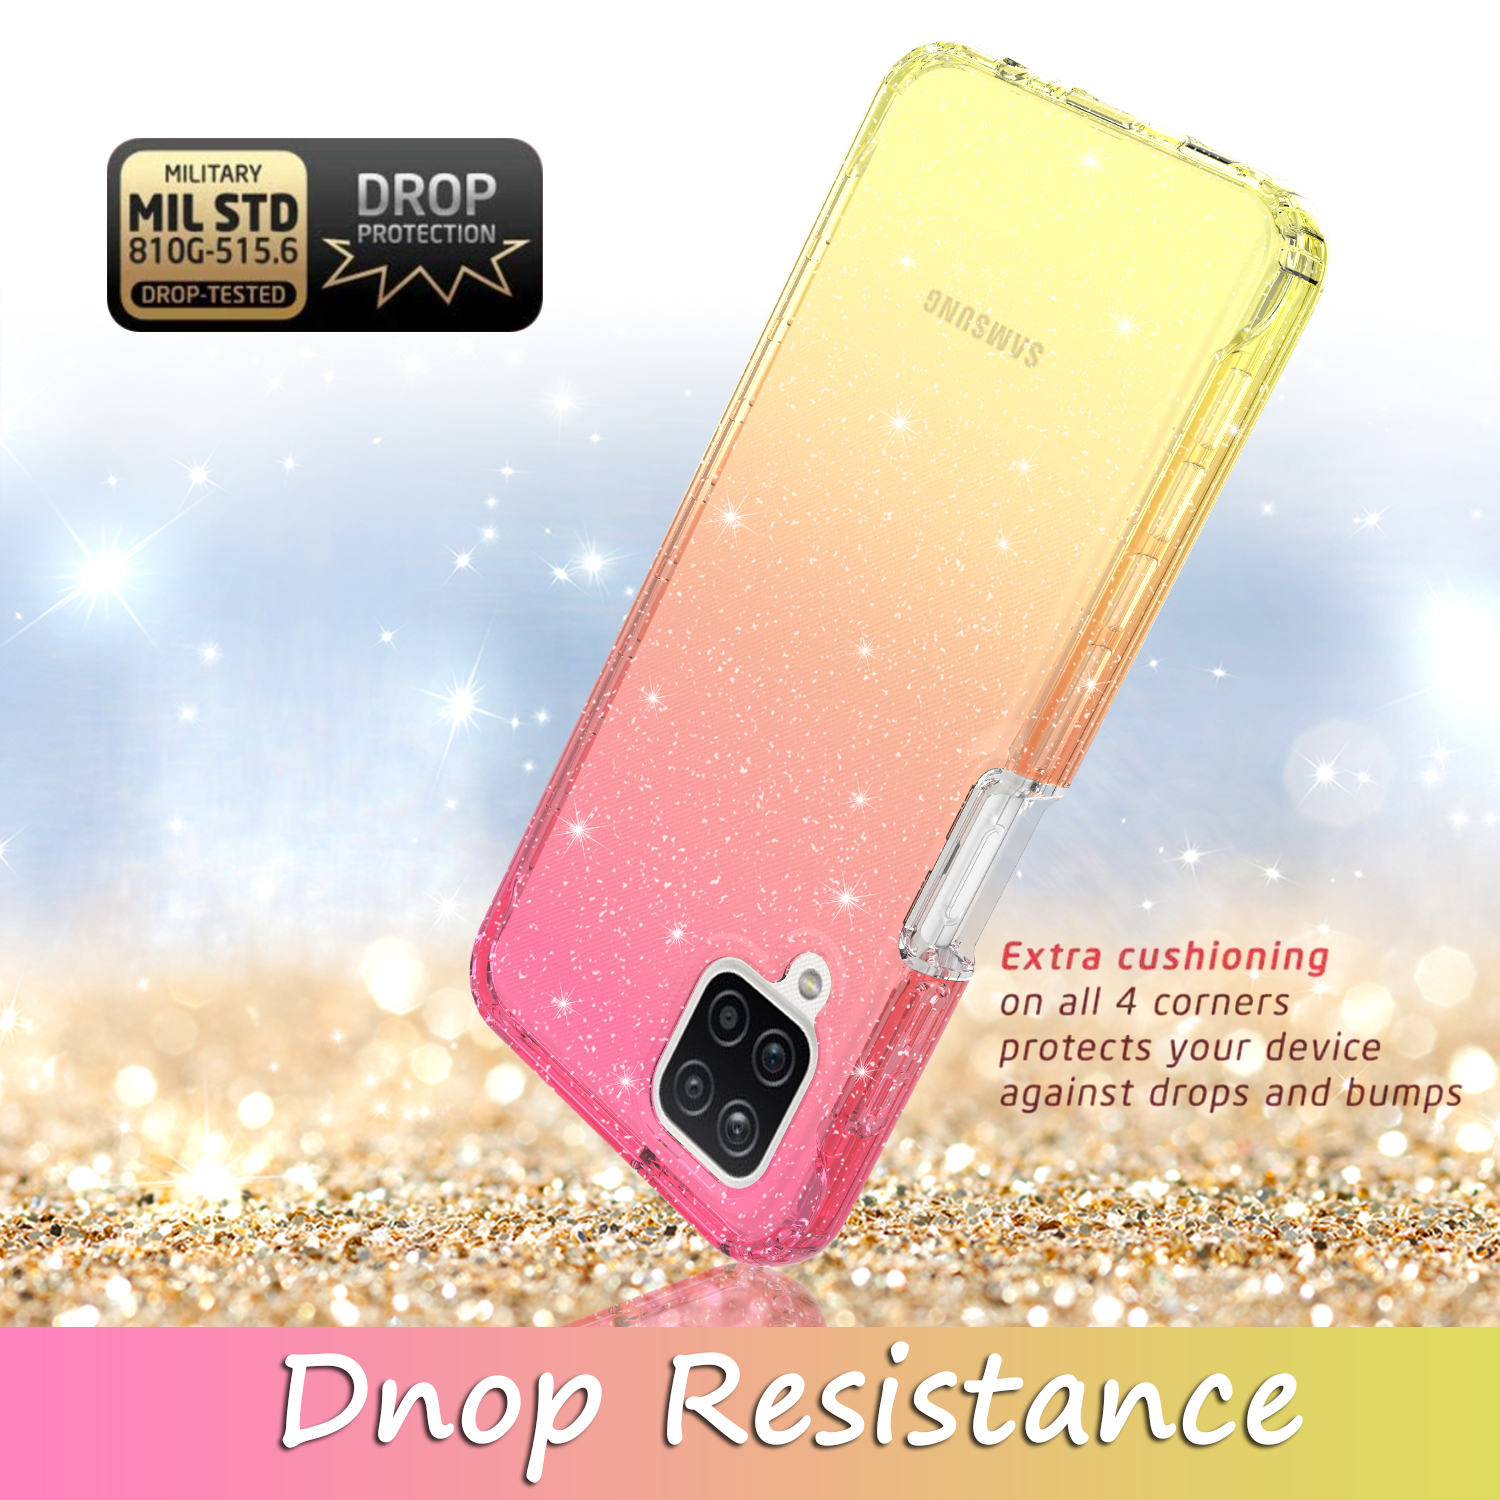 Samsung Galaxy A42 5G Case, Rosebono Hybrid Glitter Sparkle Transparent Colorful Gradient TPU Skin Cover 360 Protection Case For Samsung Galaxy A42 5G (Gold/Pink) - image 4 of 4